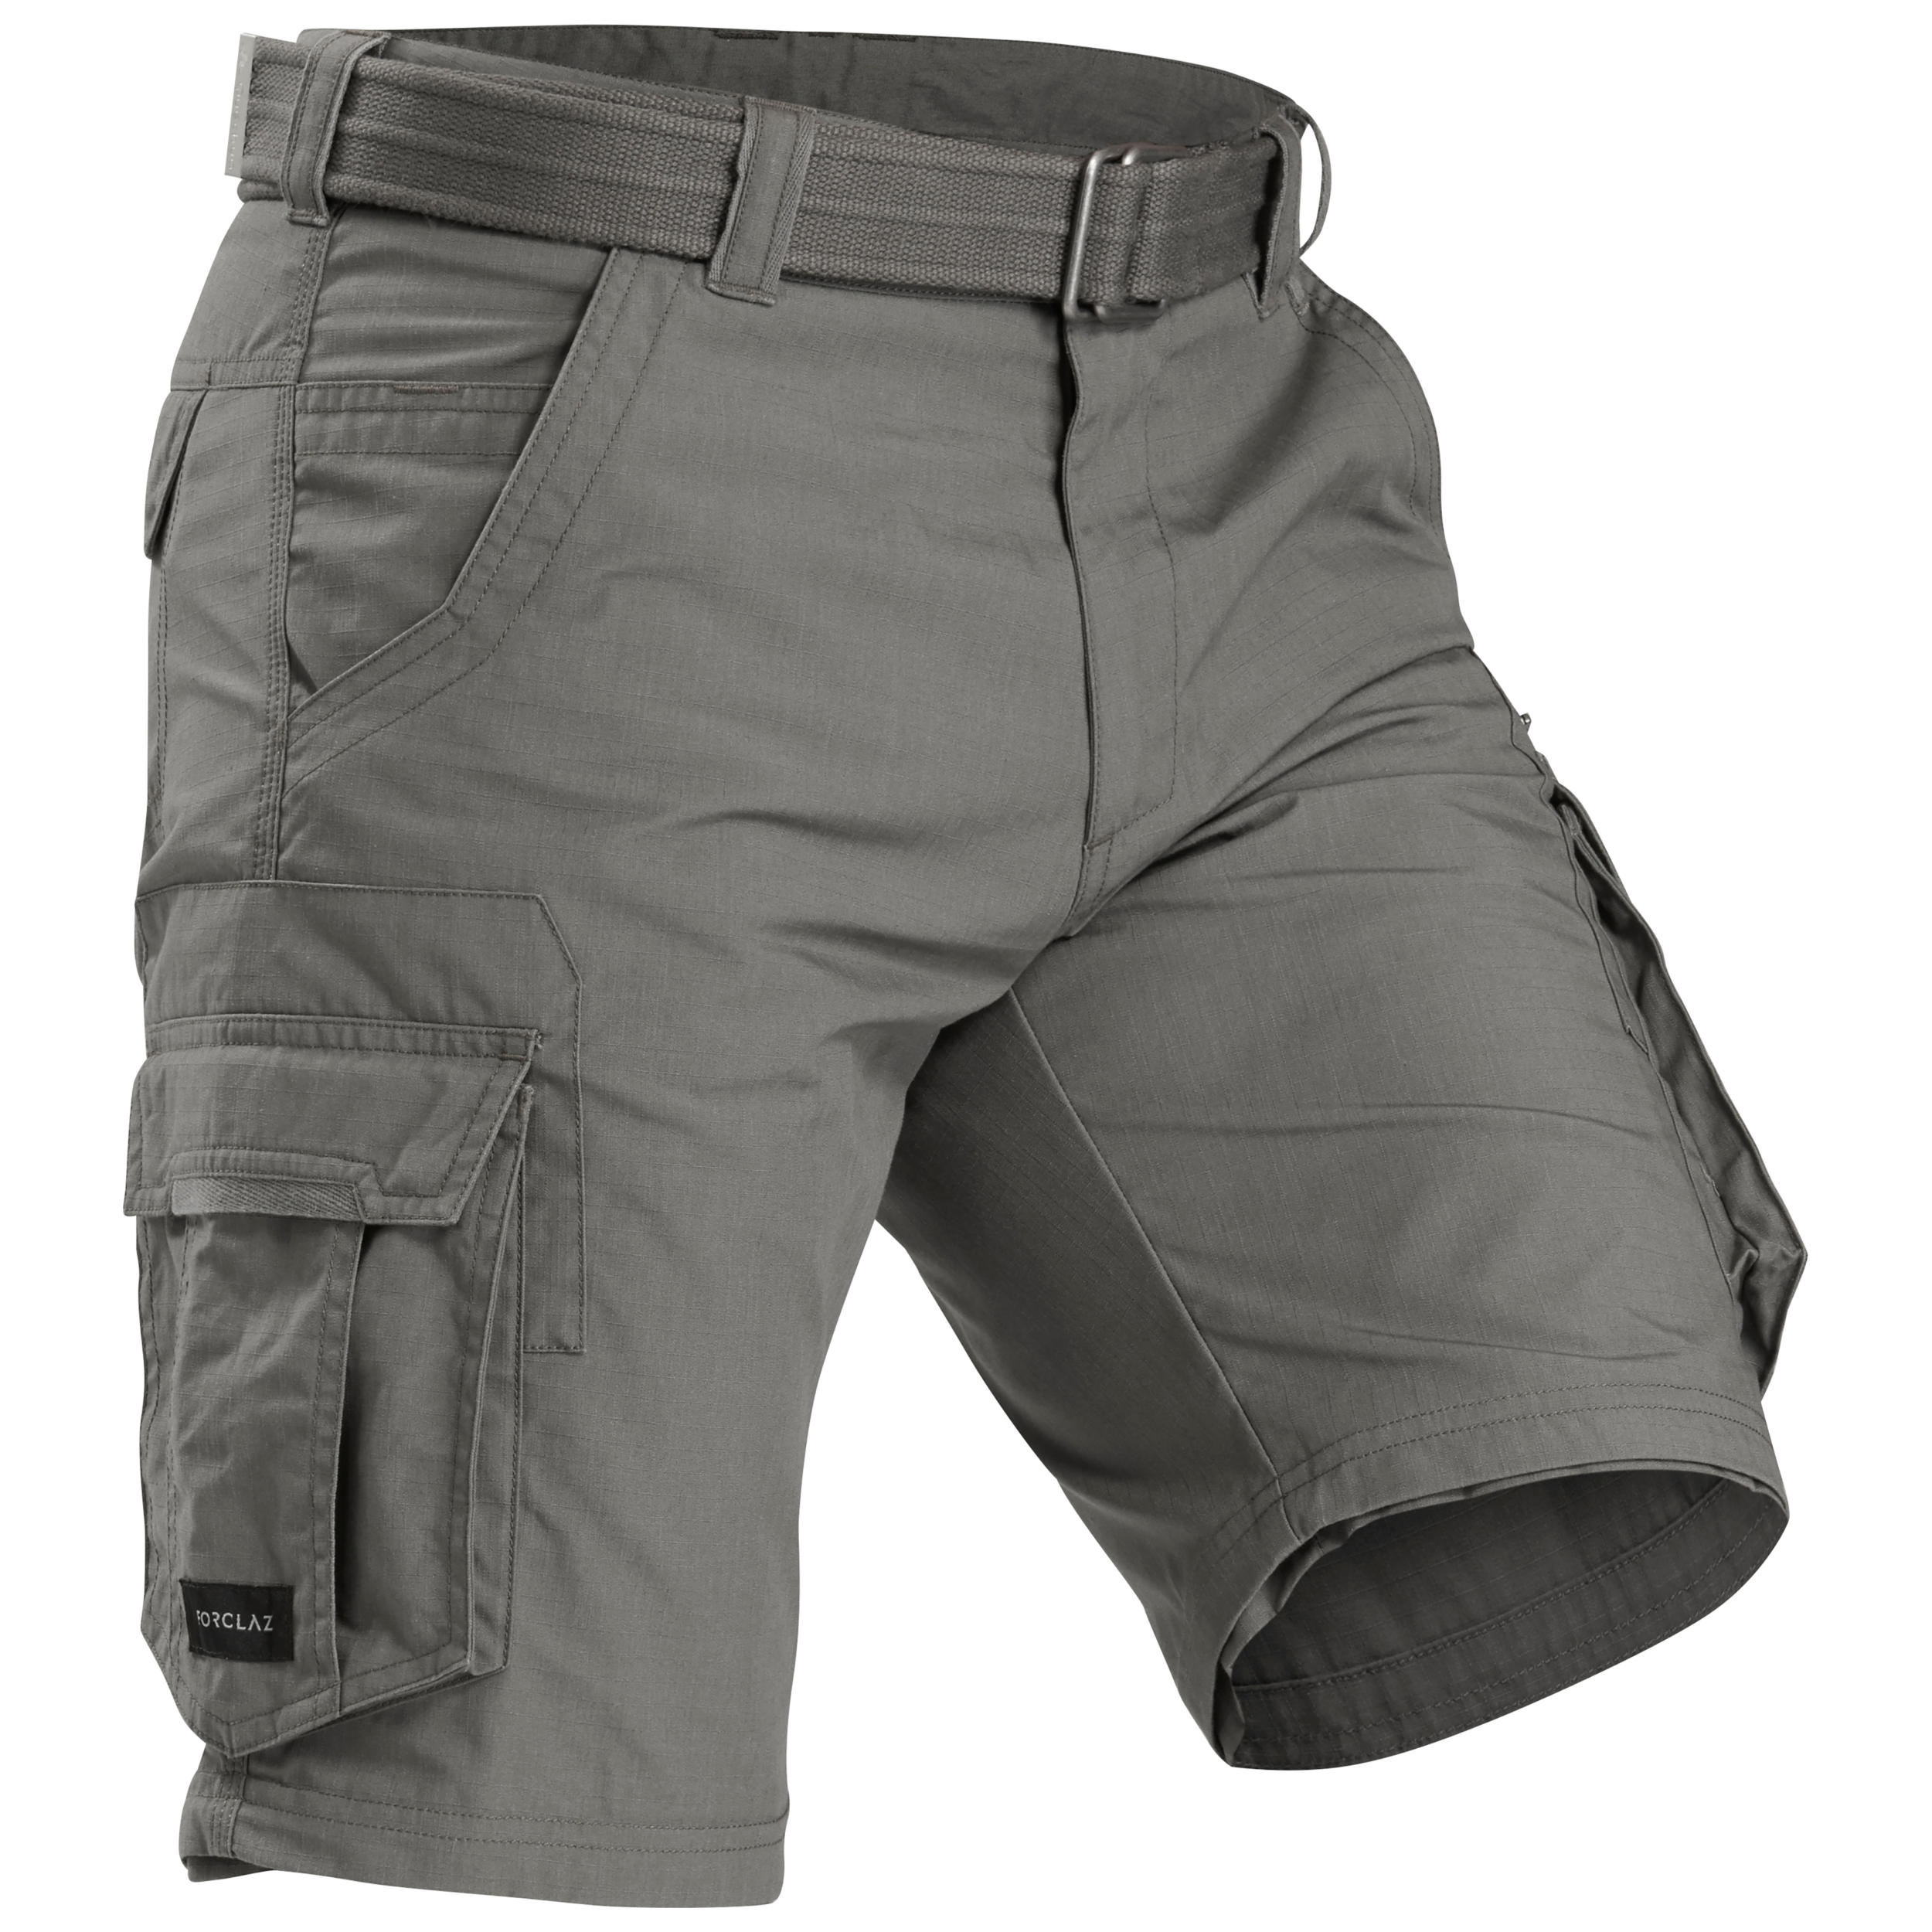 Pantalon convertible homme – Travel 100 kaki - FORCLAZ